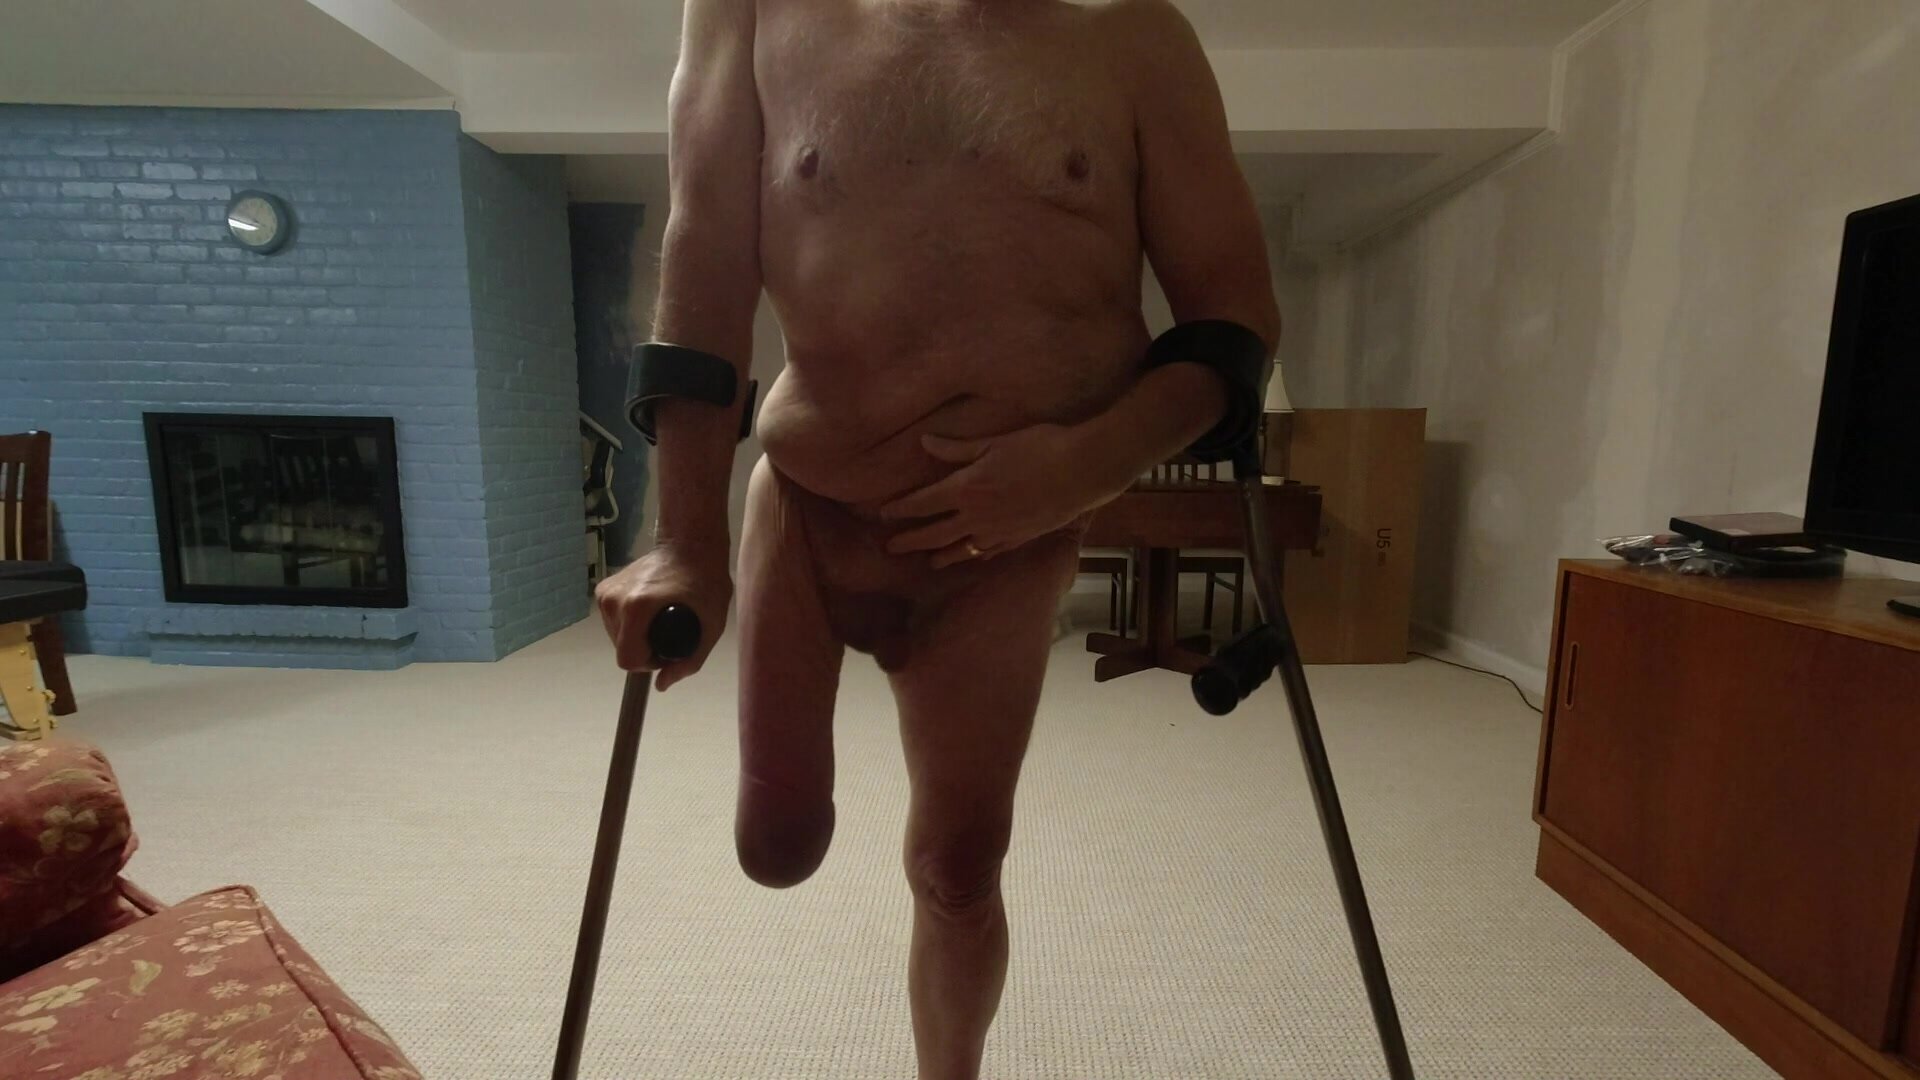 Deformed Body Porn - Polio Amputee Cripple Shows Off Deformed Body - ThisVid.com